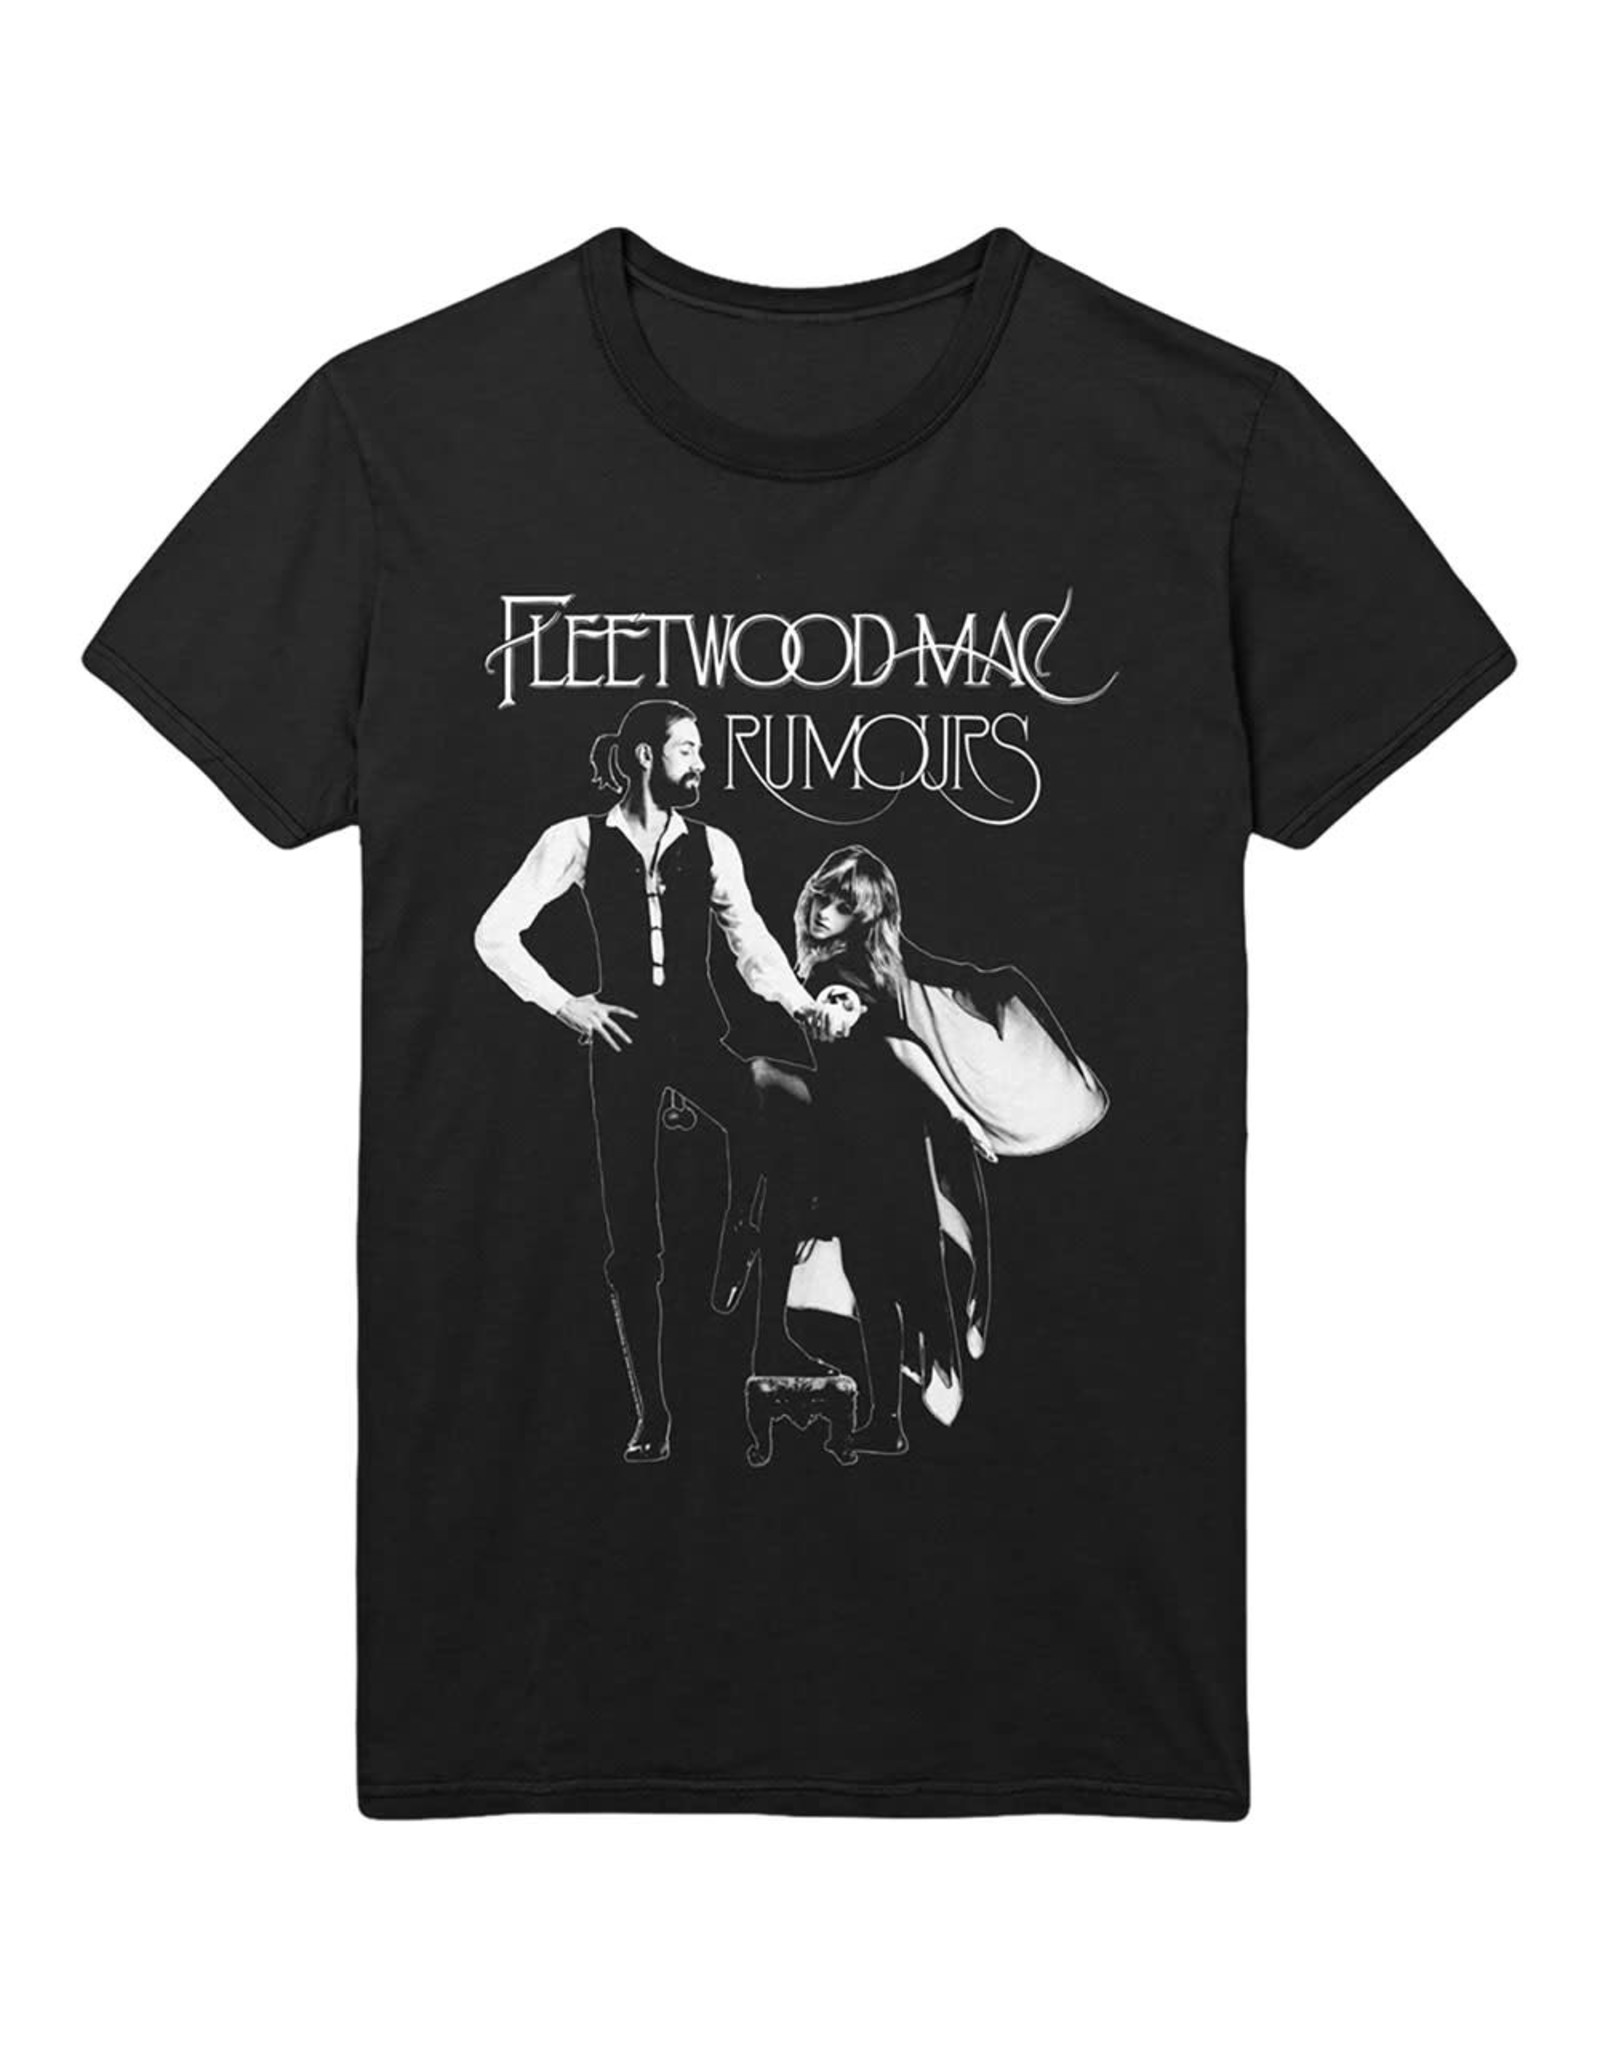 Fleetwood Mac / Rumours Tee